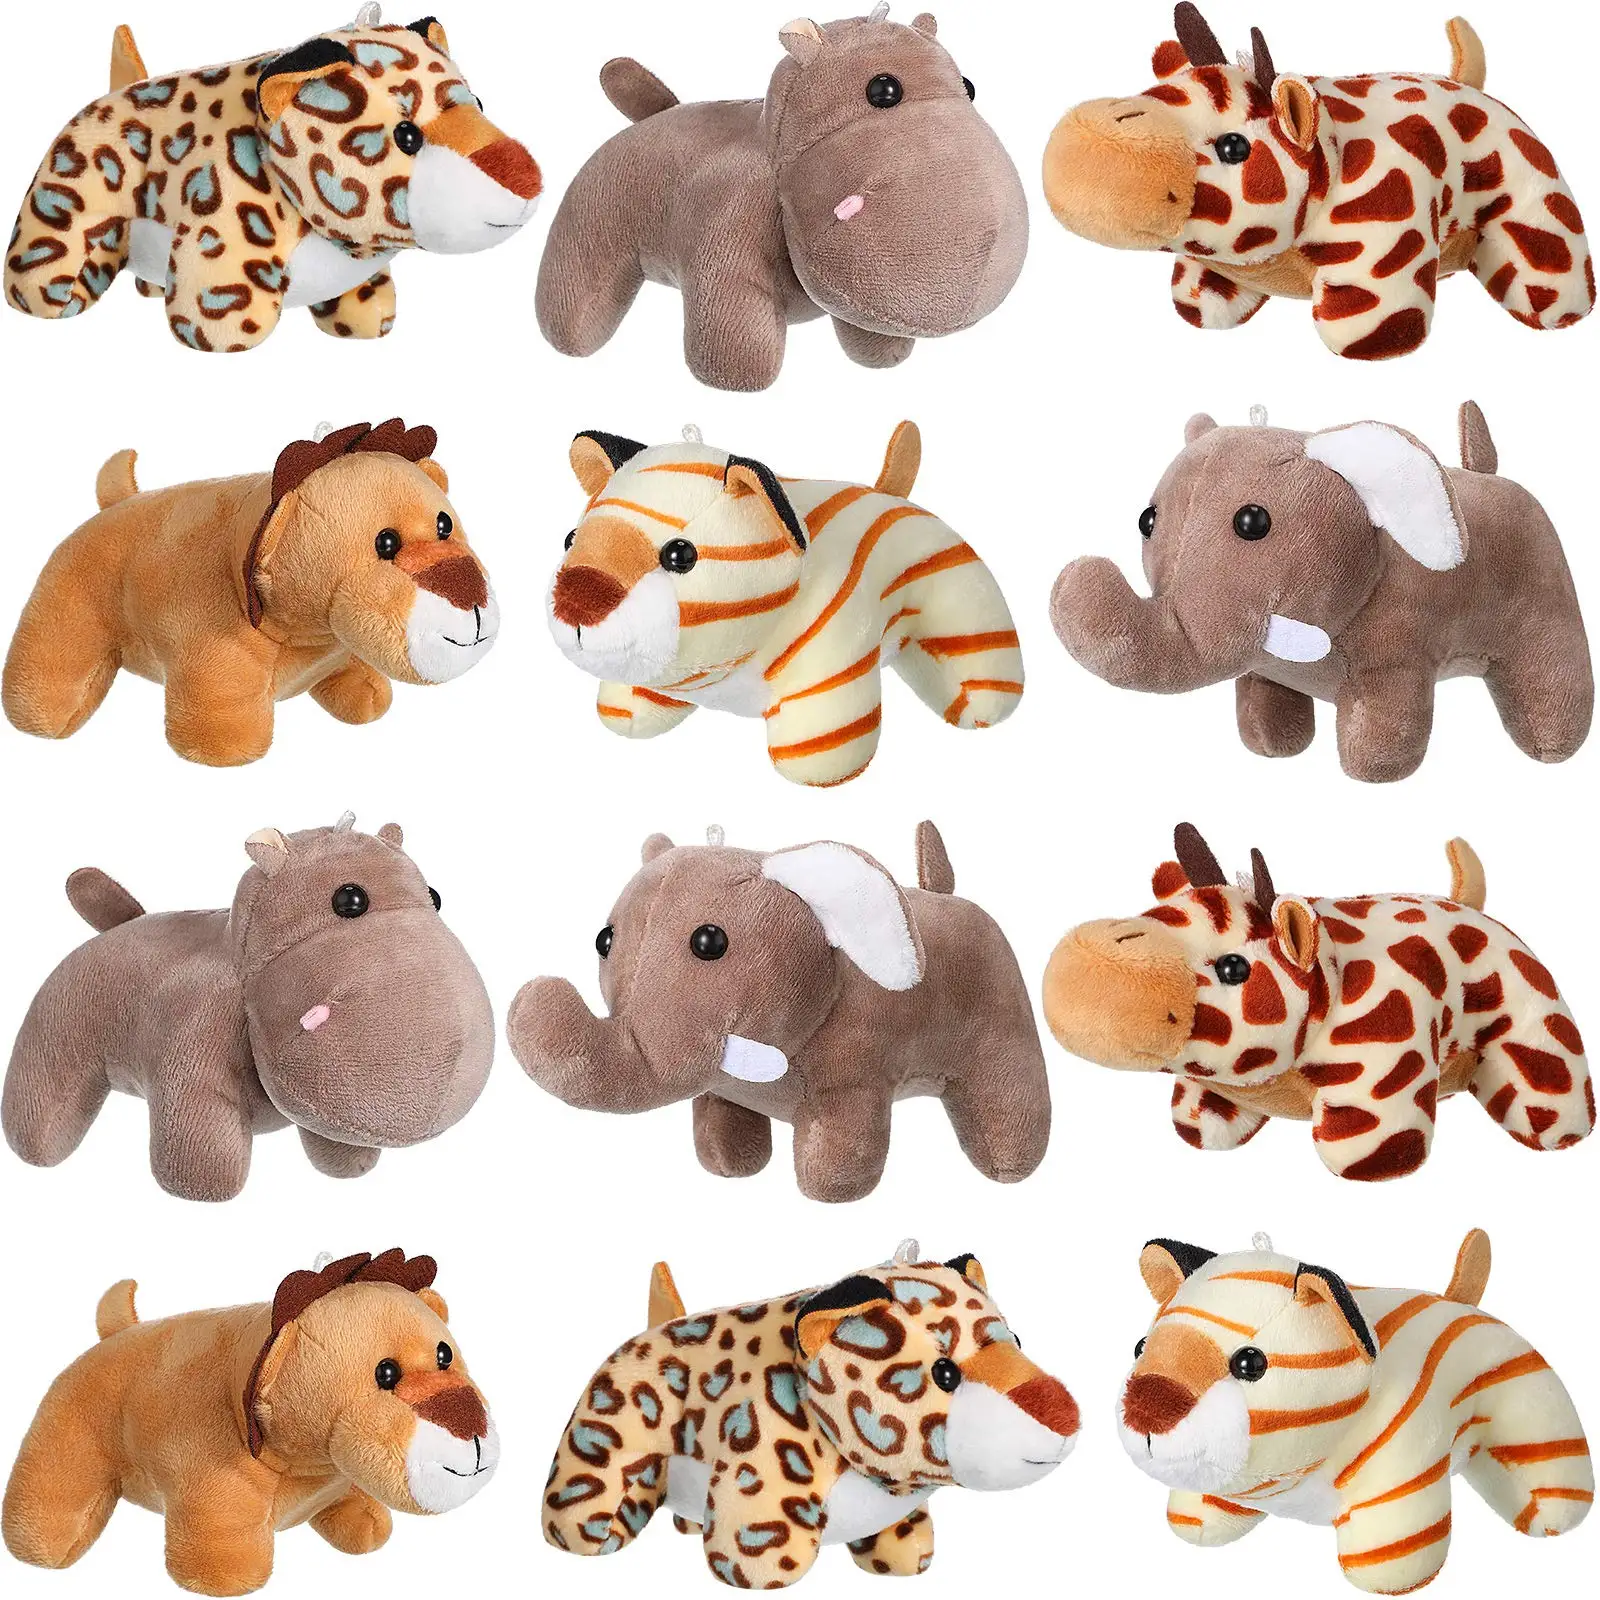 

Keychain 6Pcs Mini Stuffed Forest Animals Jungle Animal Plush Toy Cute Plush Elephant Lion Giraffe Tiger Plush for Animal Themed